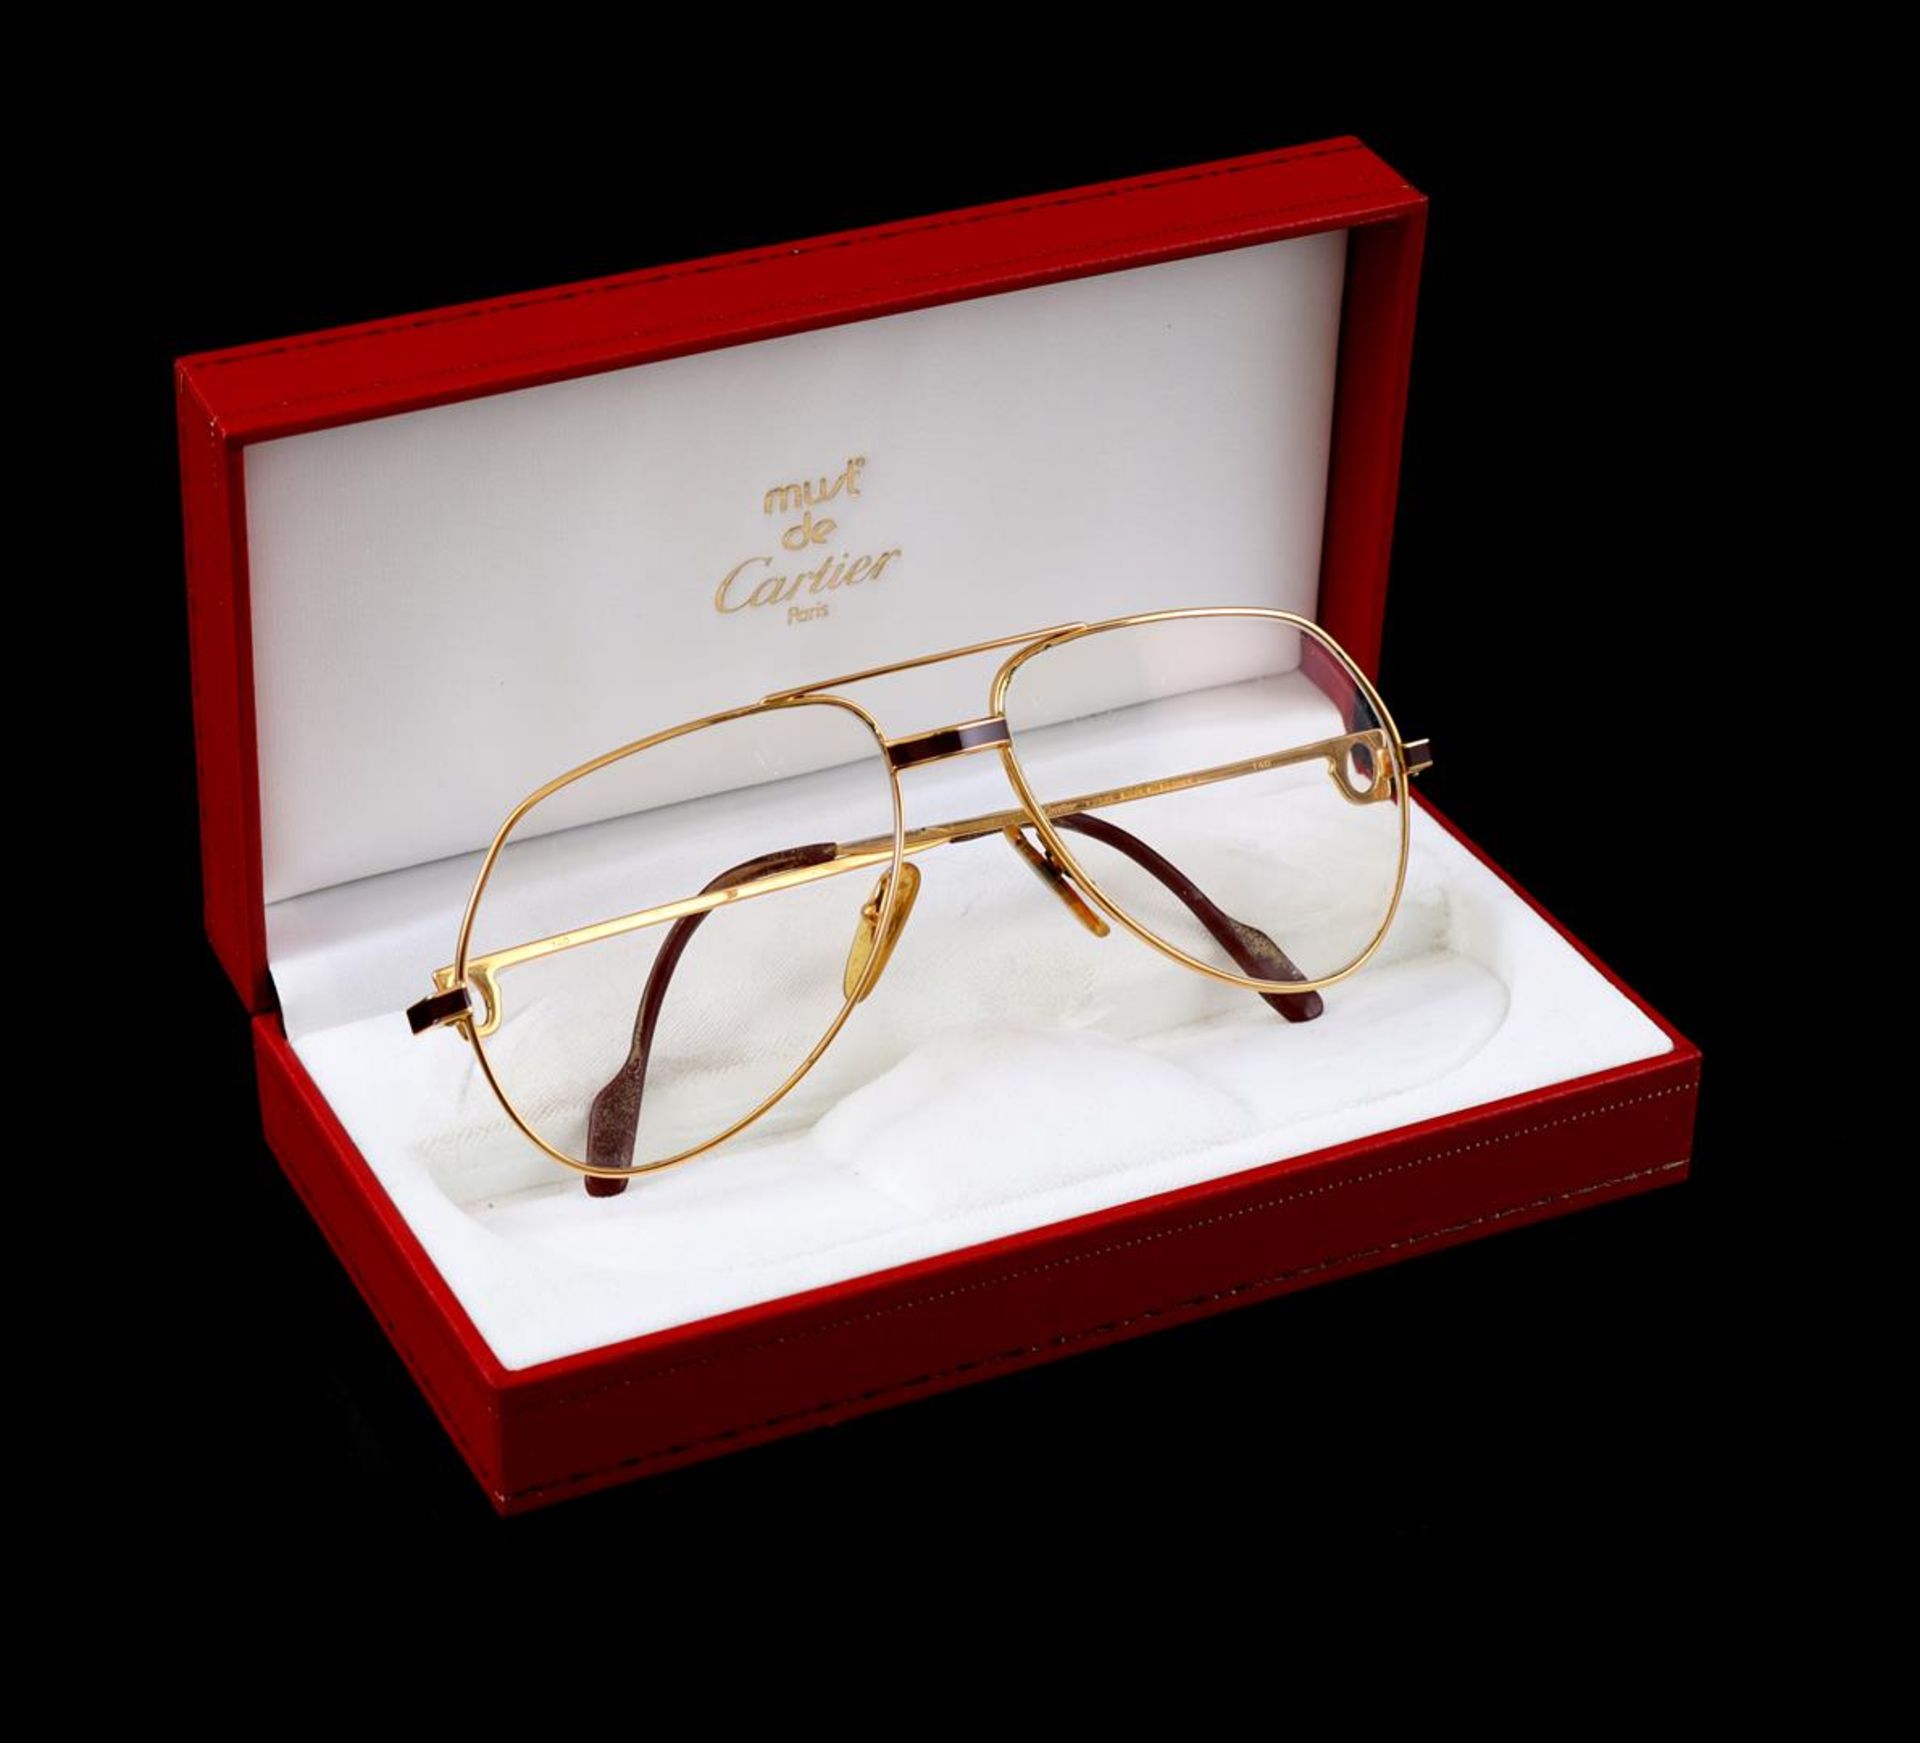 Cartier France glasses